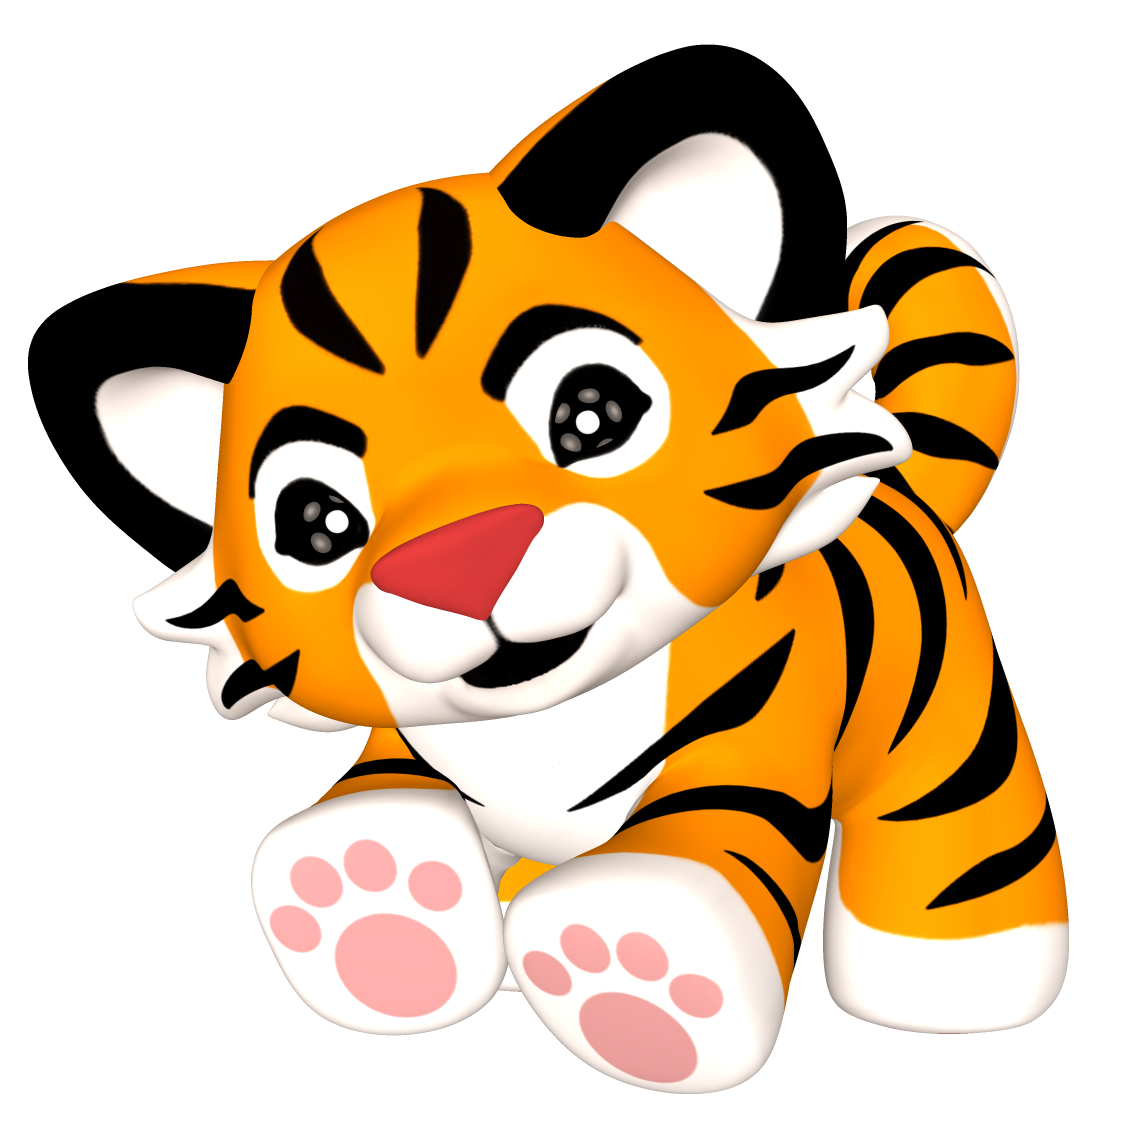 Free at getdrawings com. Clipart snow tiger